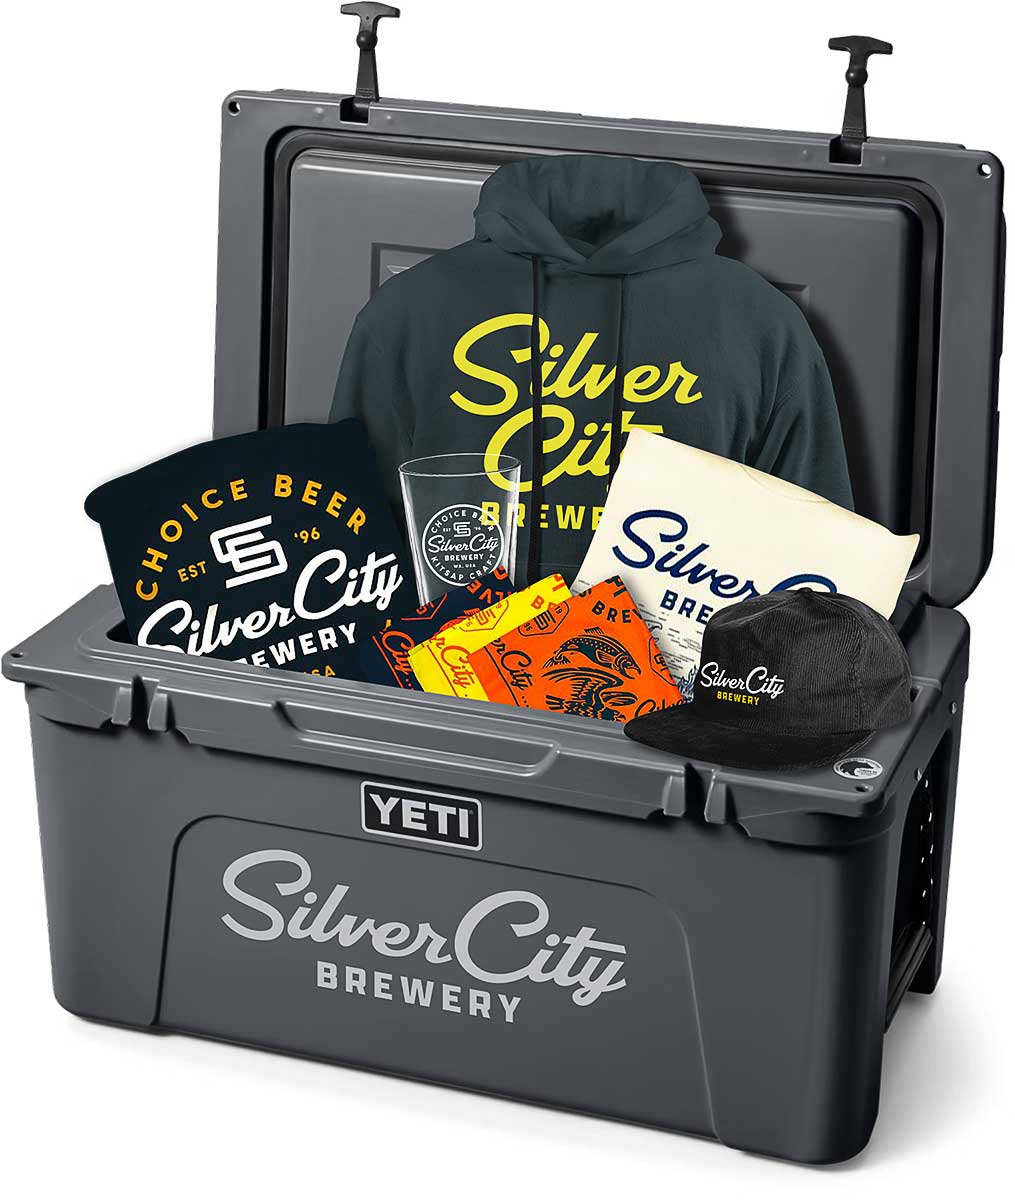 Silver City Brewery merch